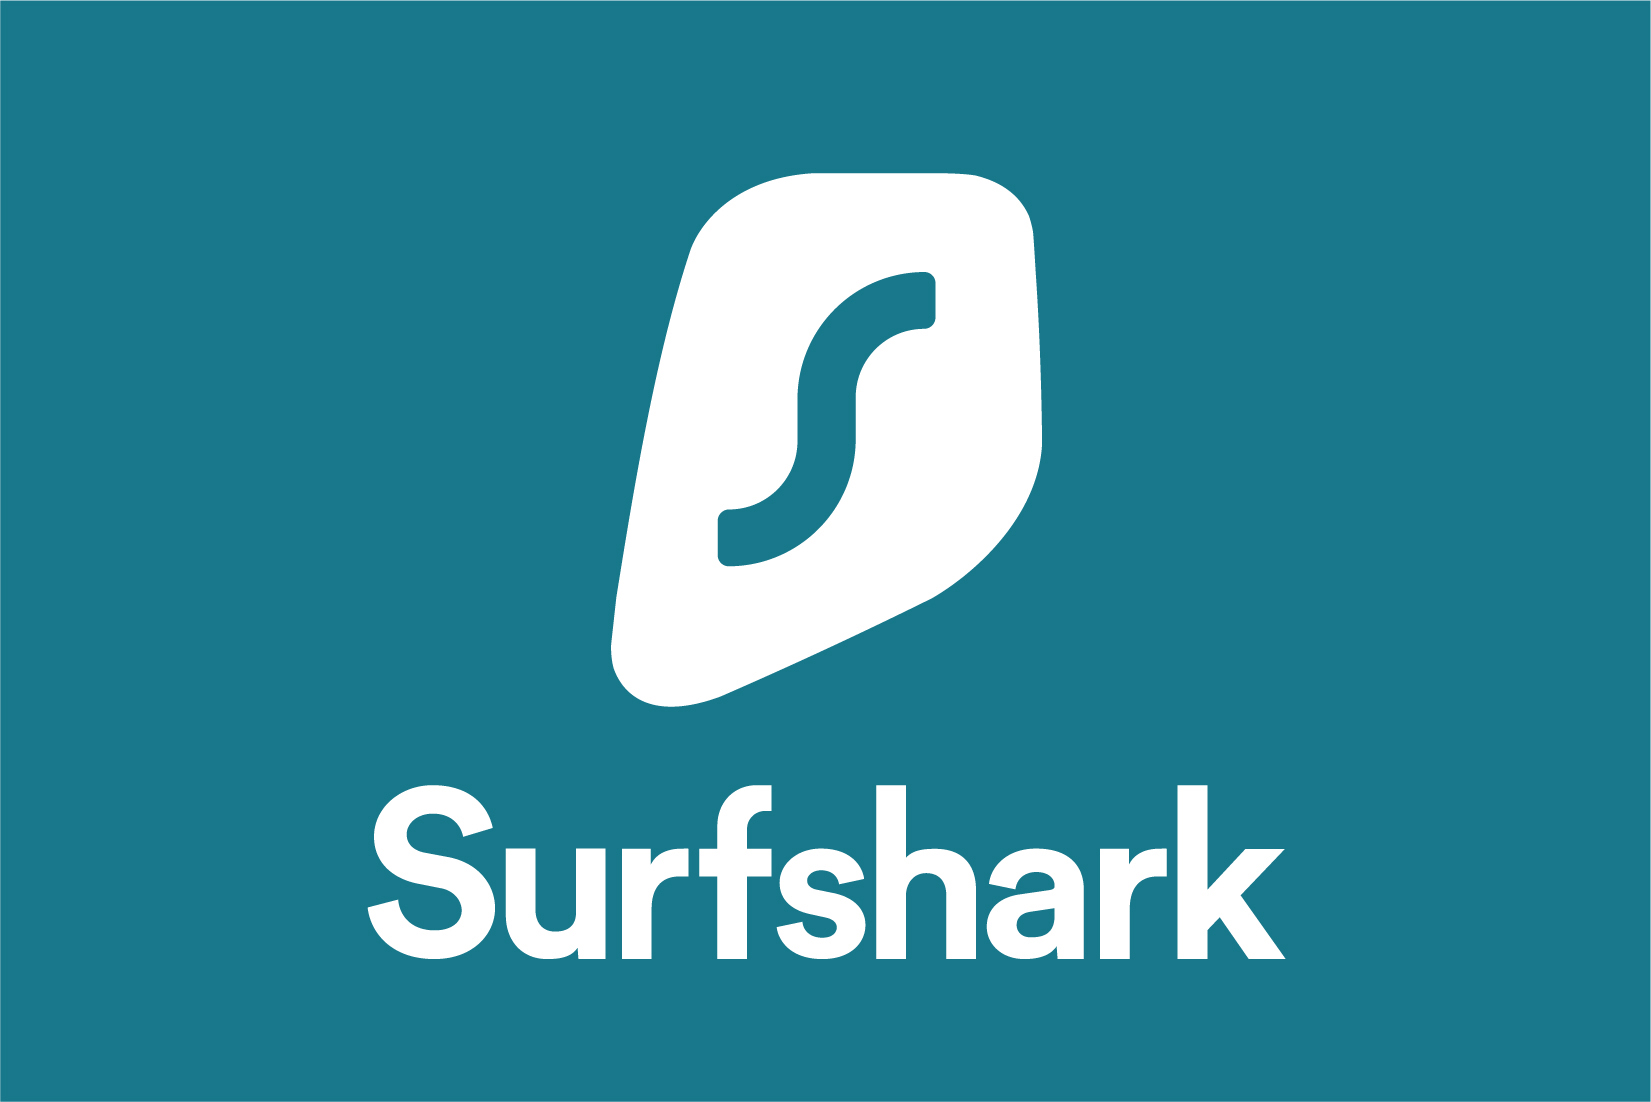 Surfshark introduces alternative ID, revolutionizing online privacy